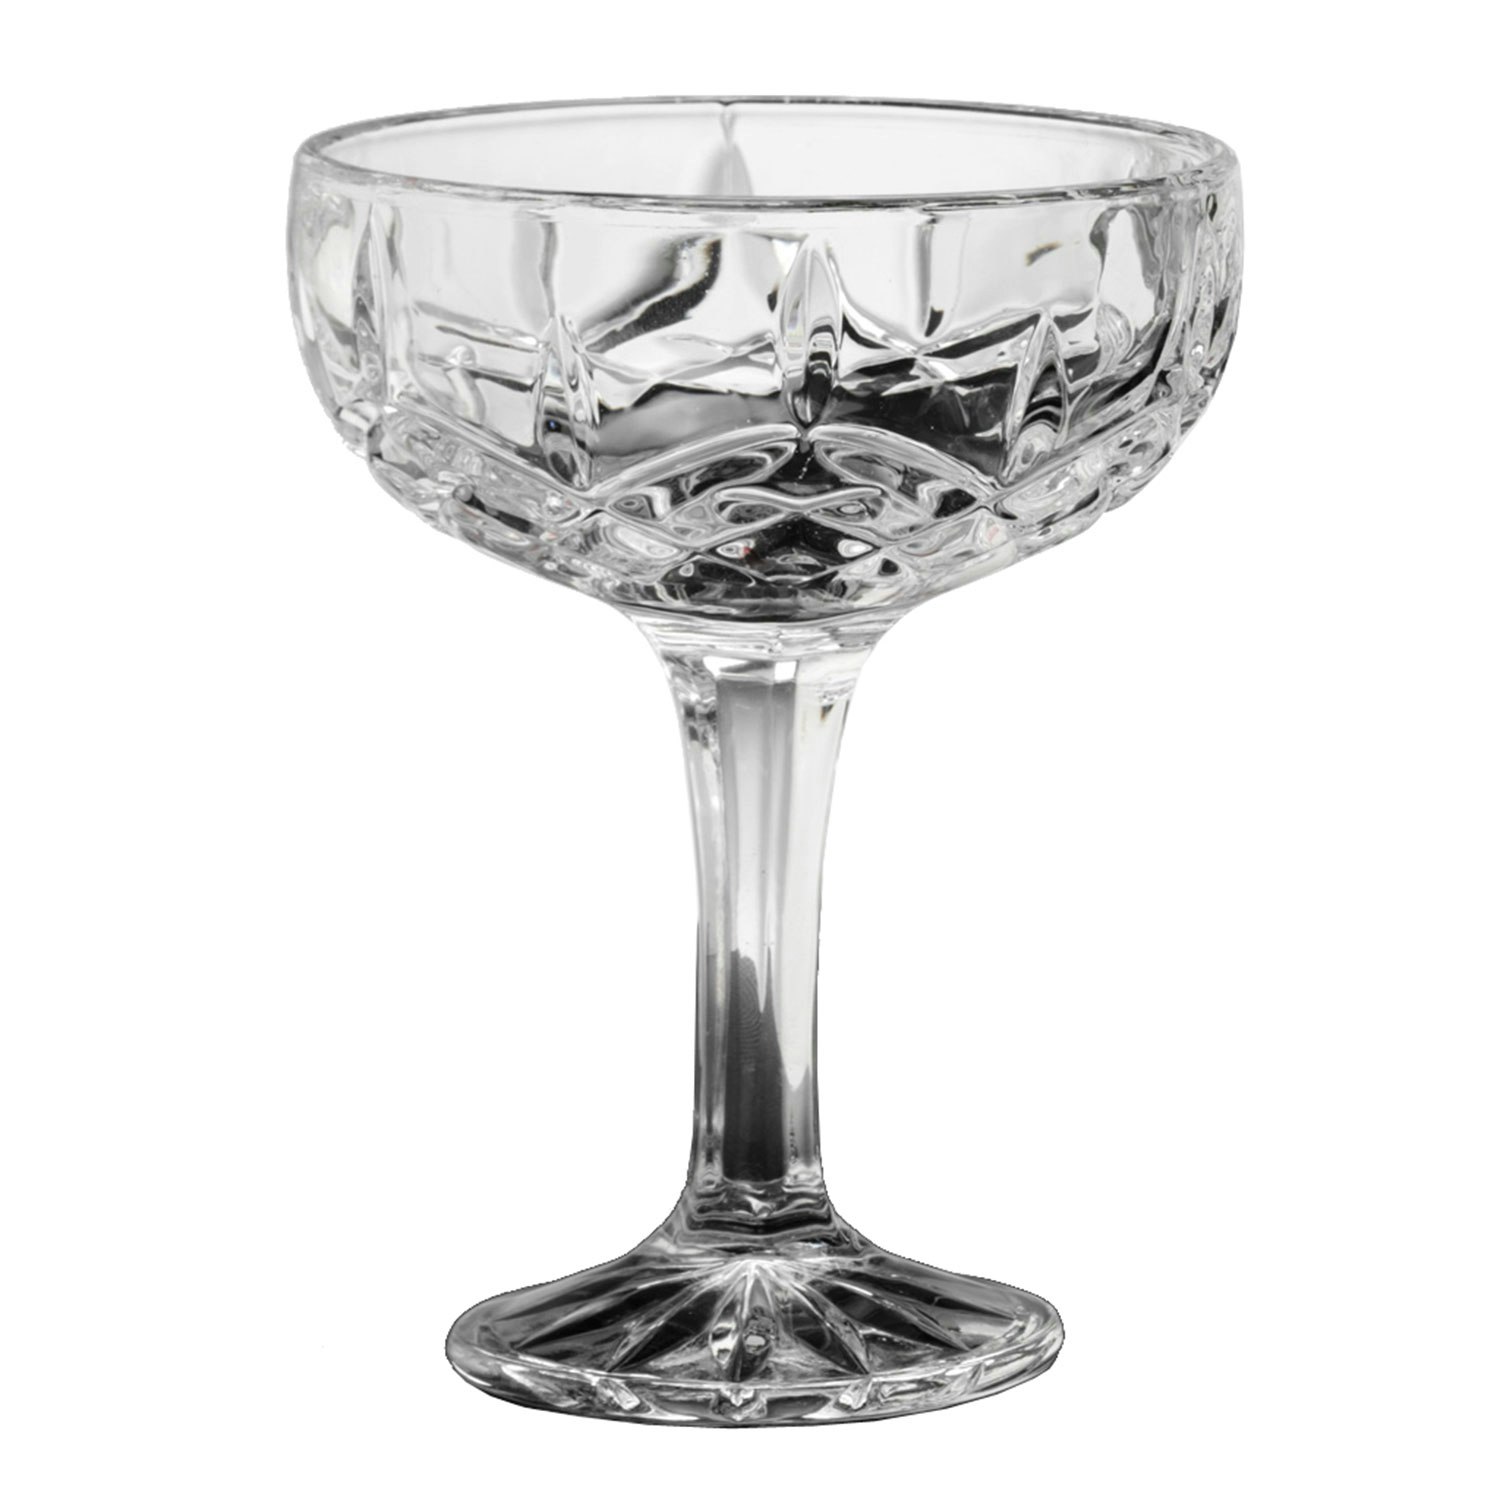 https://royaldesign.com/image/2/aida-harvey-champagne-glass-4-pcs-clear-0